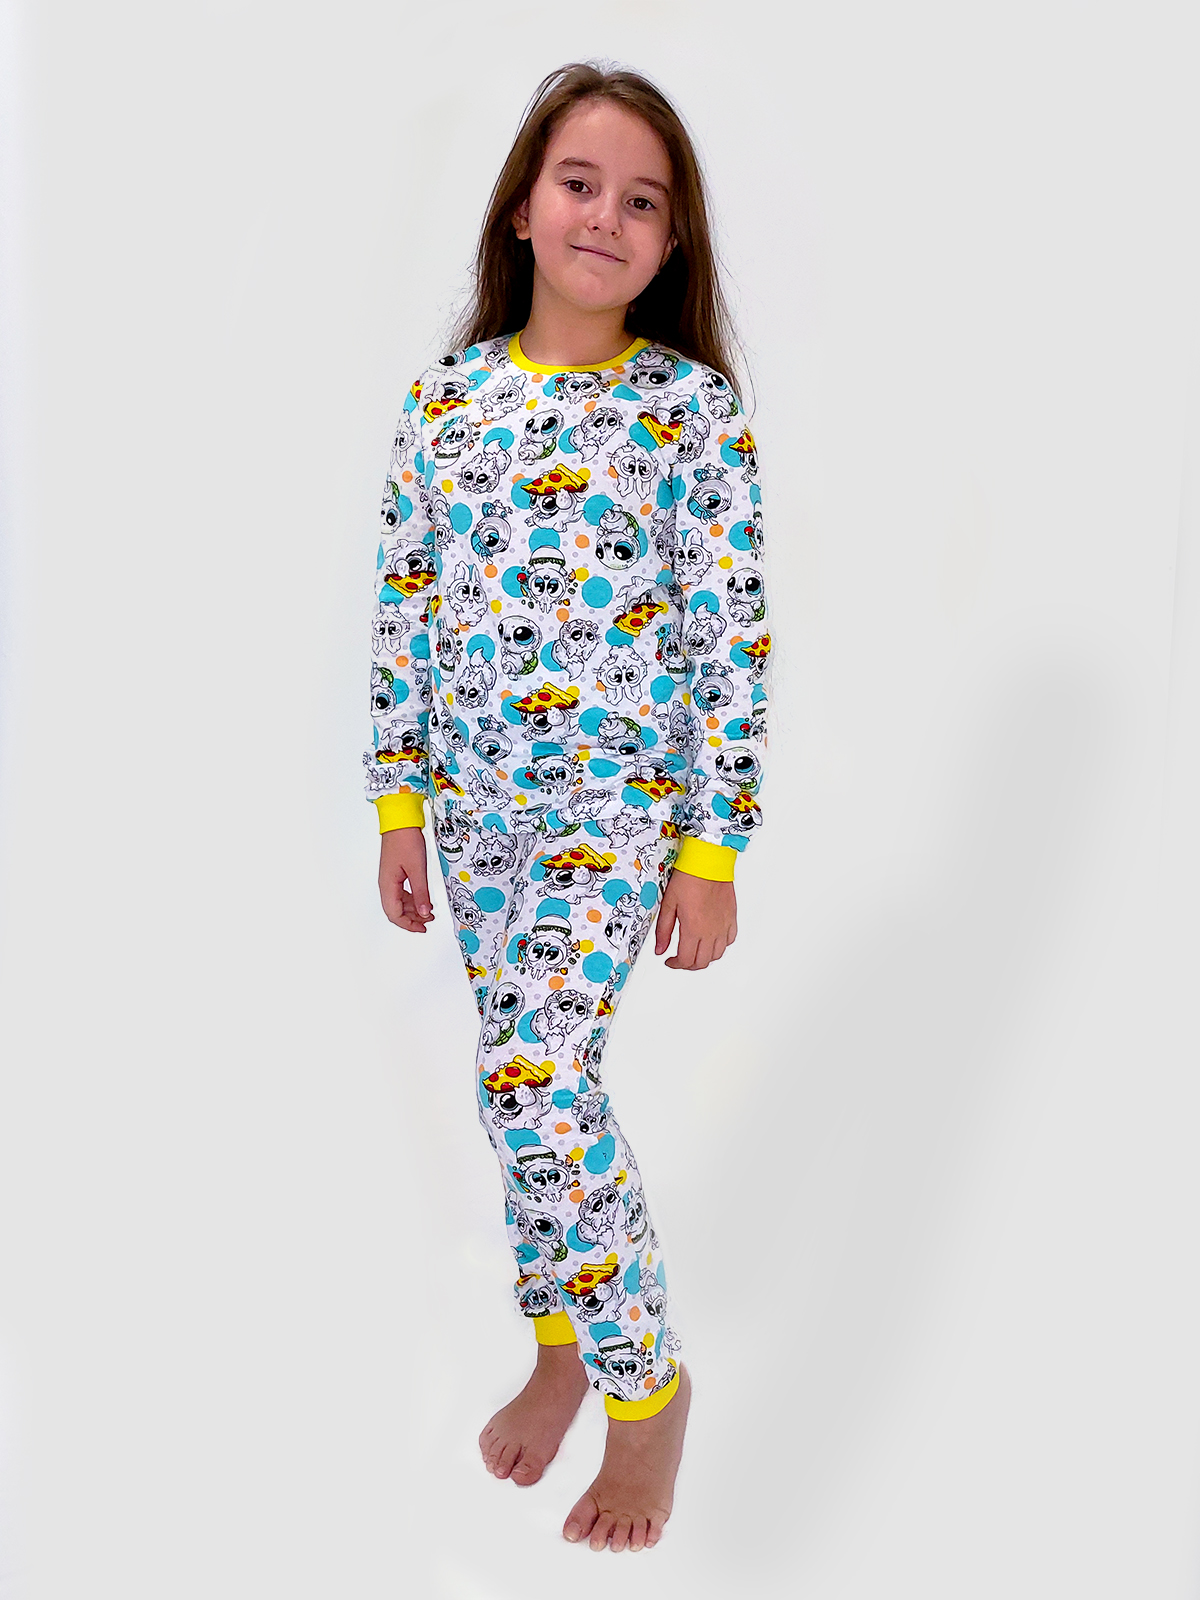 Пижама для девочки фото в интернет-магазин TREND